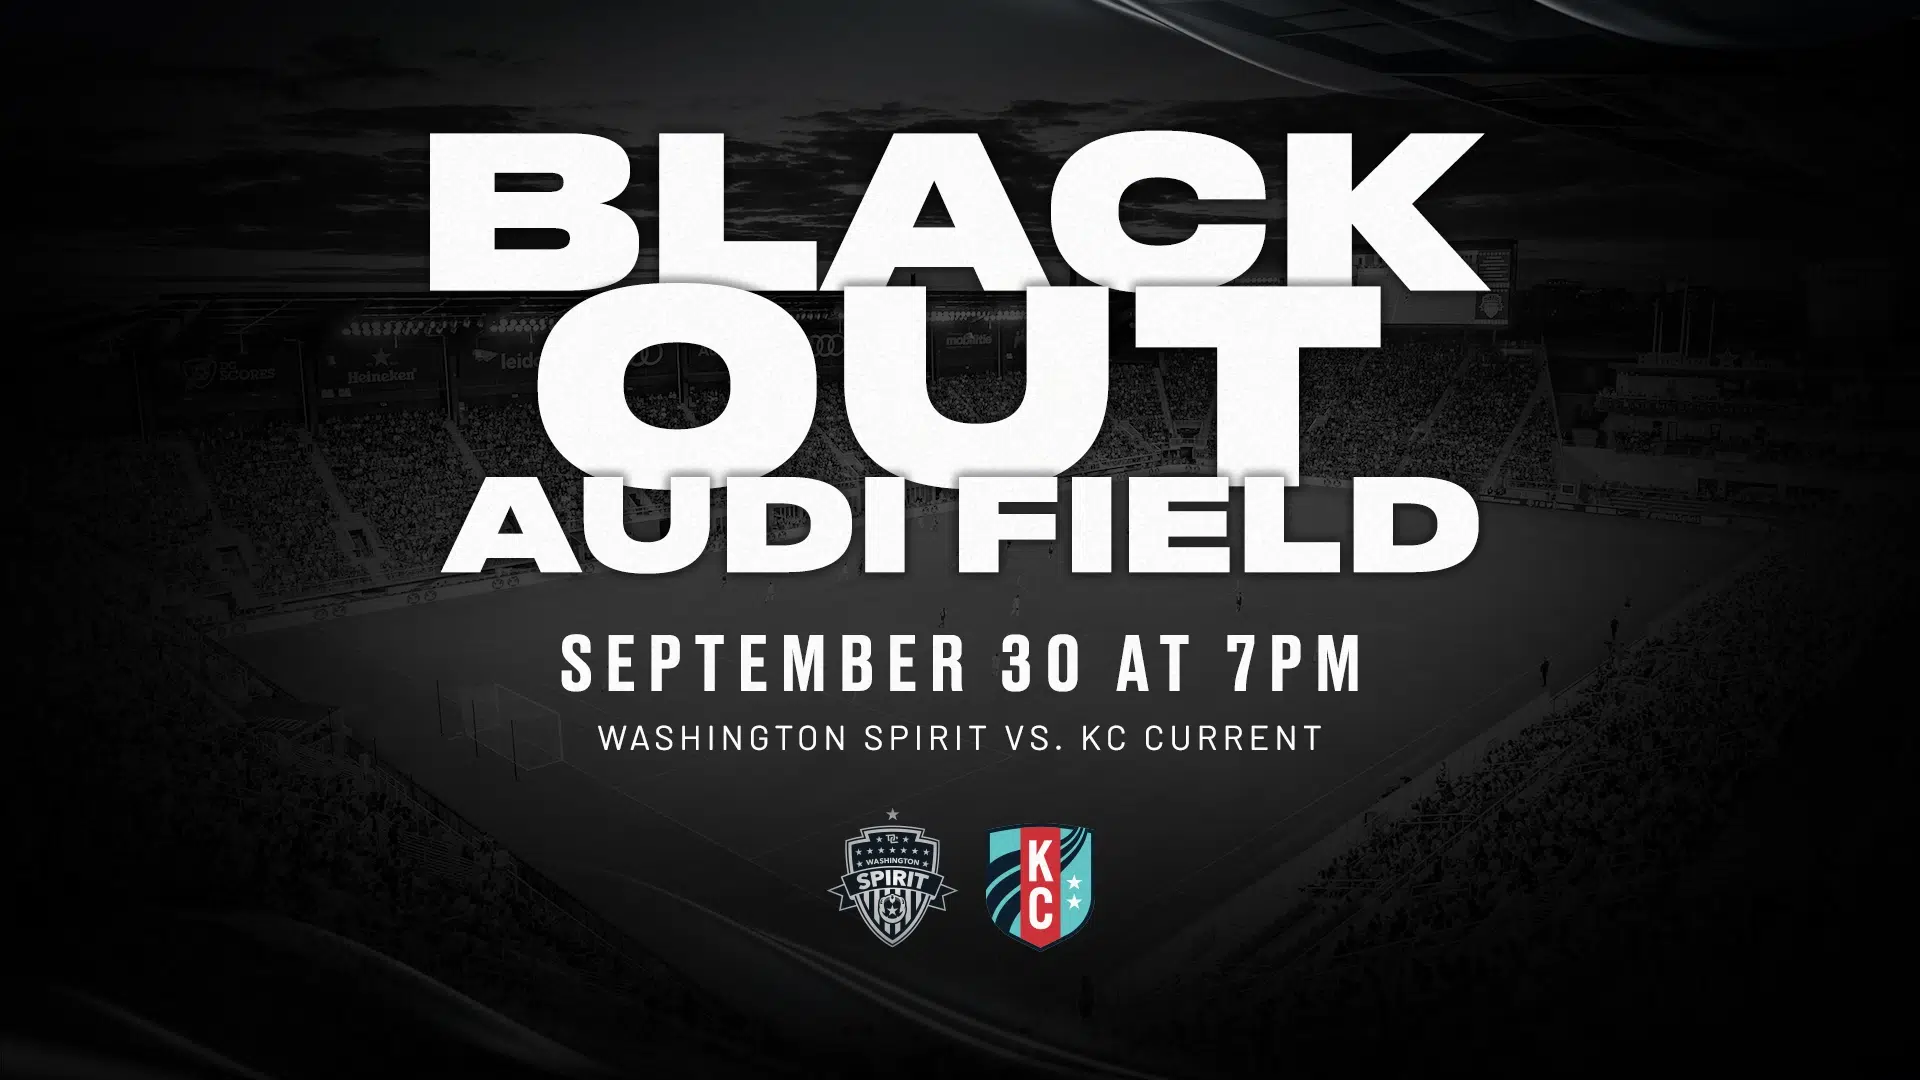 BLACK OUT AUDI FIELD. September 30 at 7 pm. Washington Spirit vs. KC Current.